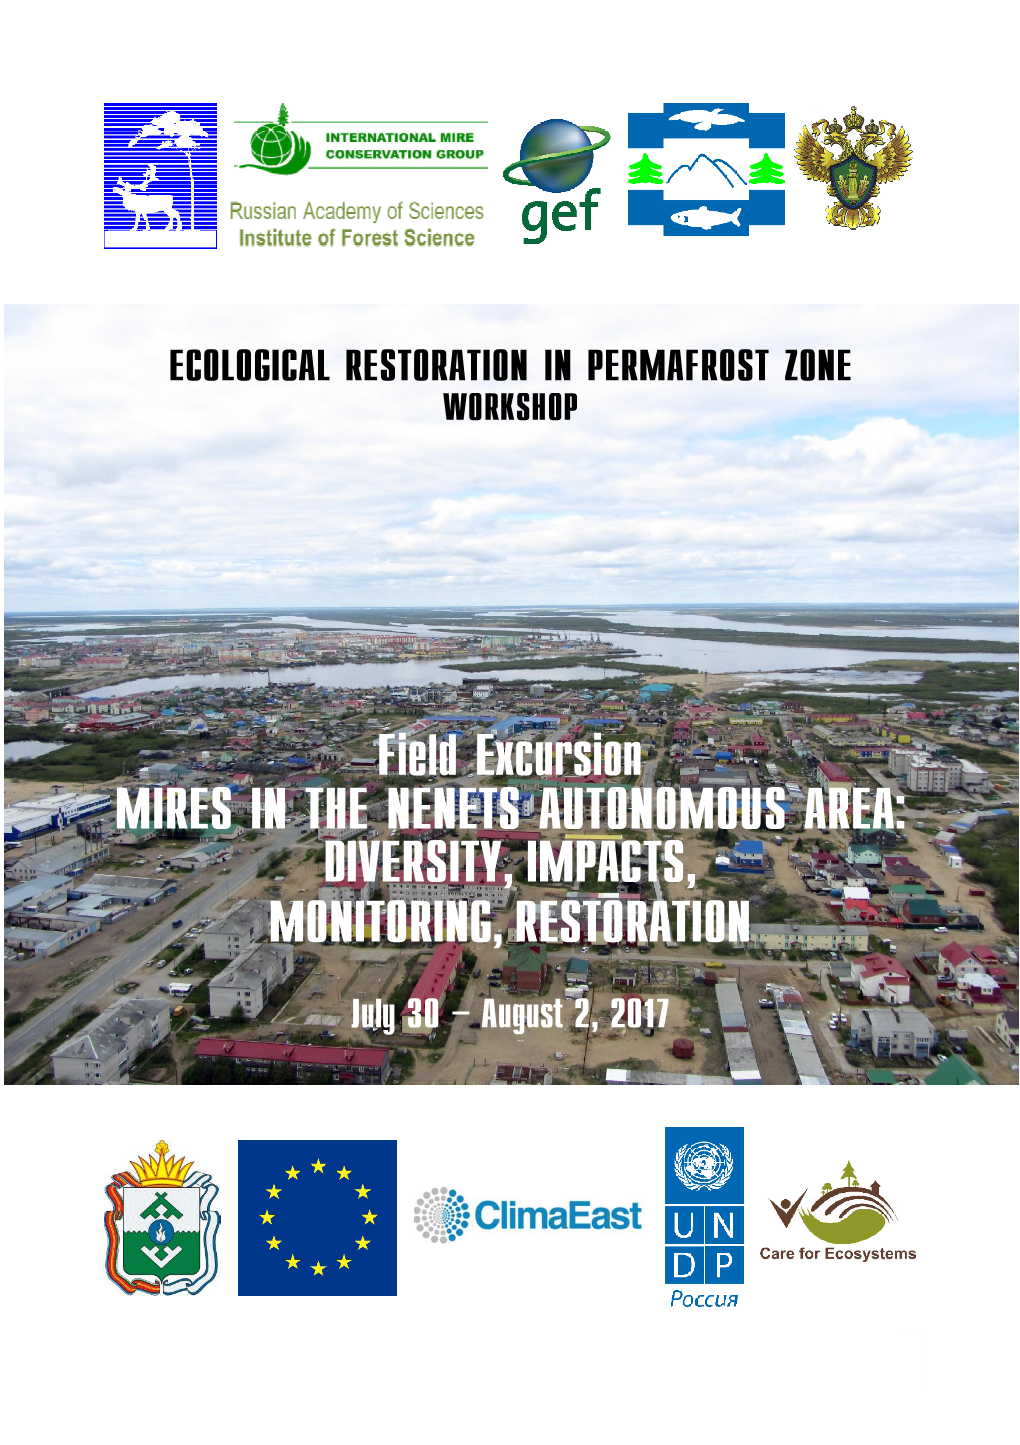 Mires in the Nenets Autonomous Area: Diversity, Impacts, Monitoring, Restoration